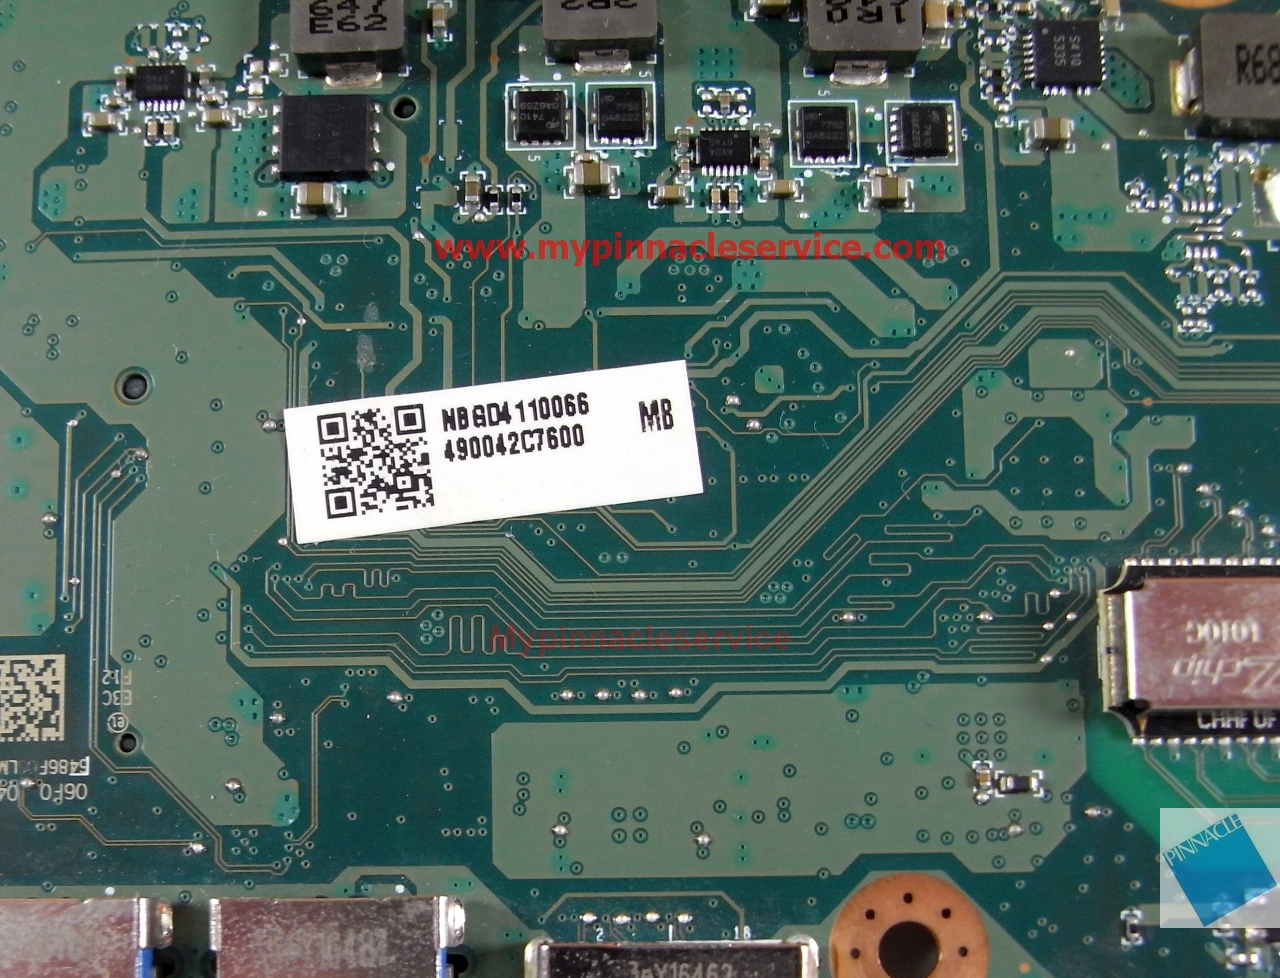 nbgd411006-i5-7200u-gt940m-motherboard-for-acer-aspire-e5-575g-f5-573g-dazaamb16e0-rimg0035.jpg